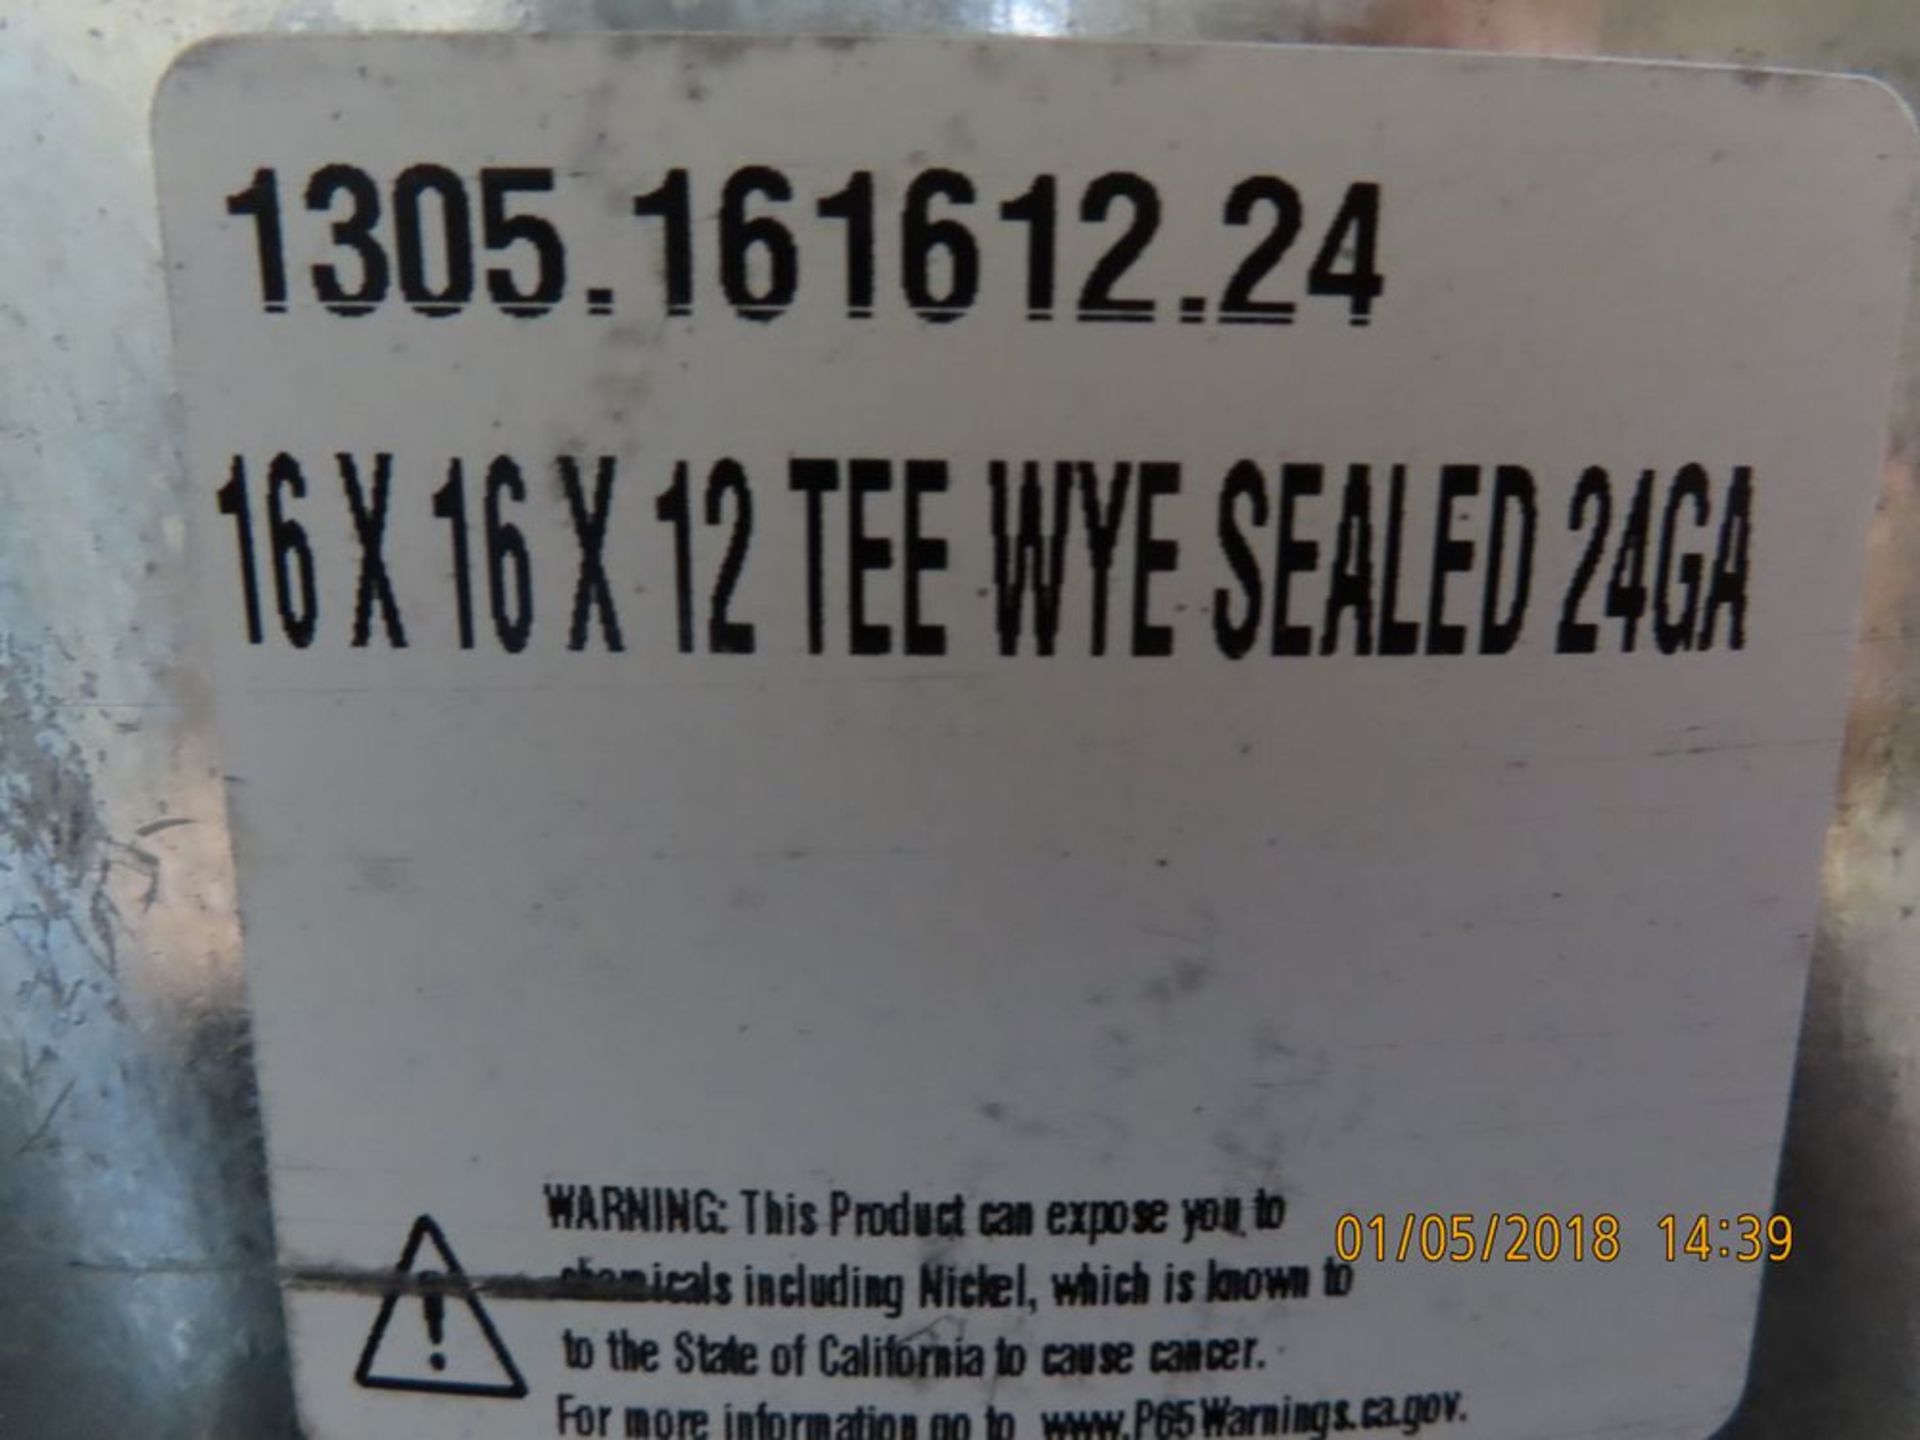 (Lot) Tee Wye Sealed, 24 Ga., 16x16x12 (13 pcs) - Image 2 of 2